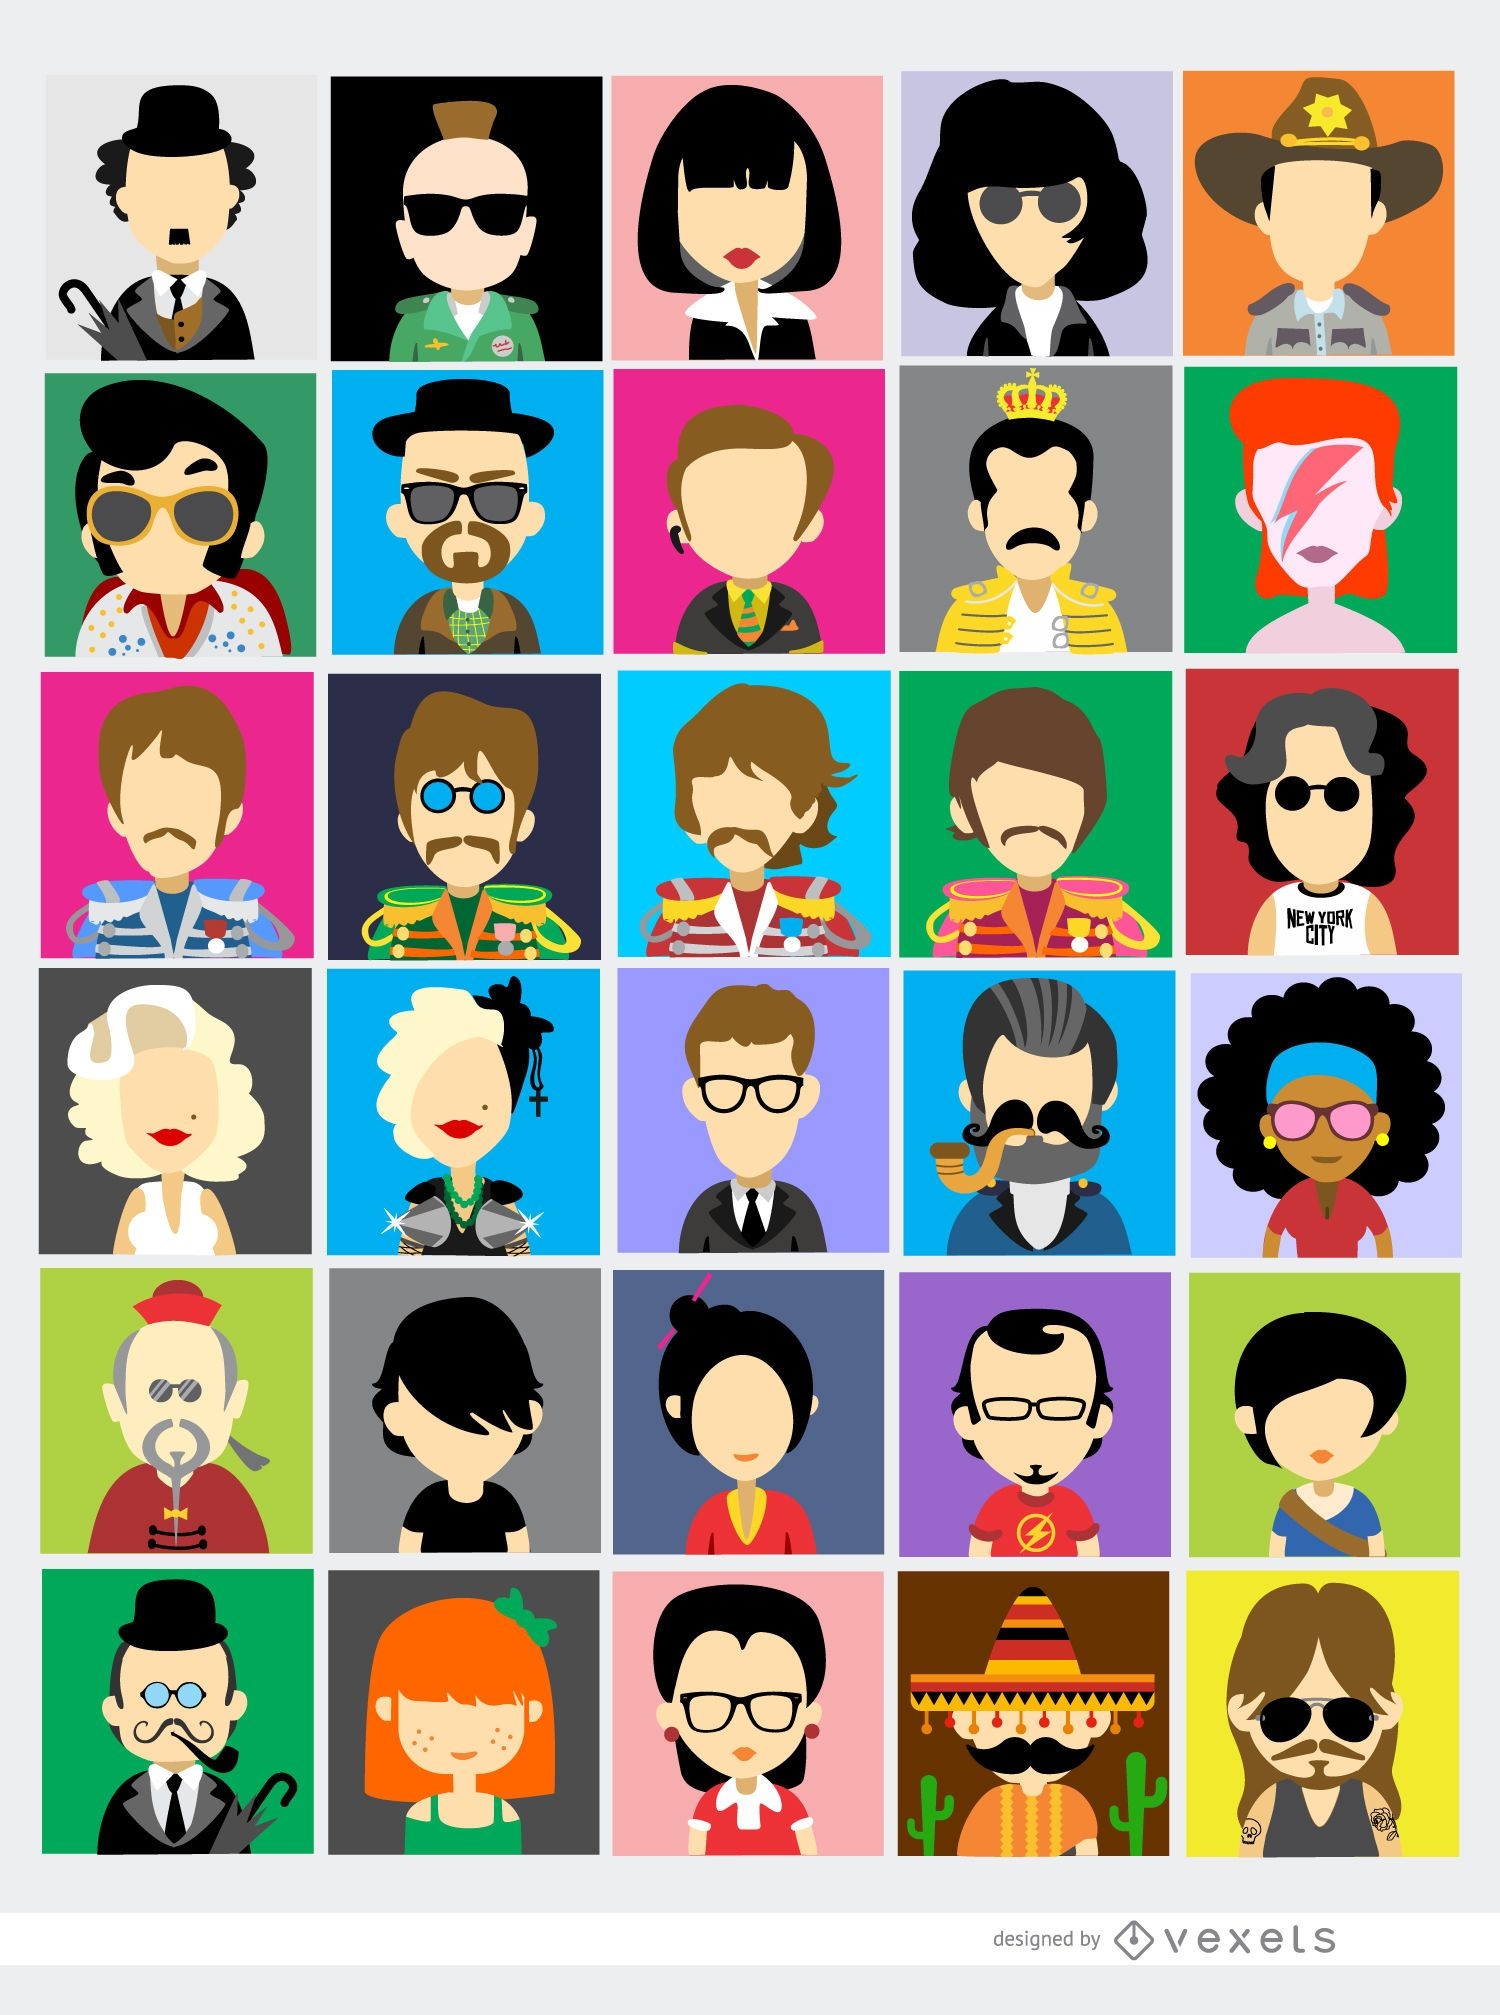 30 avatares de personajes famosos